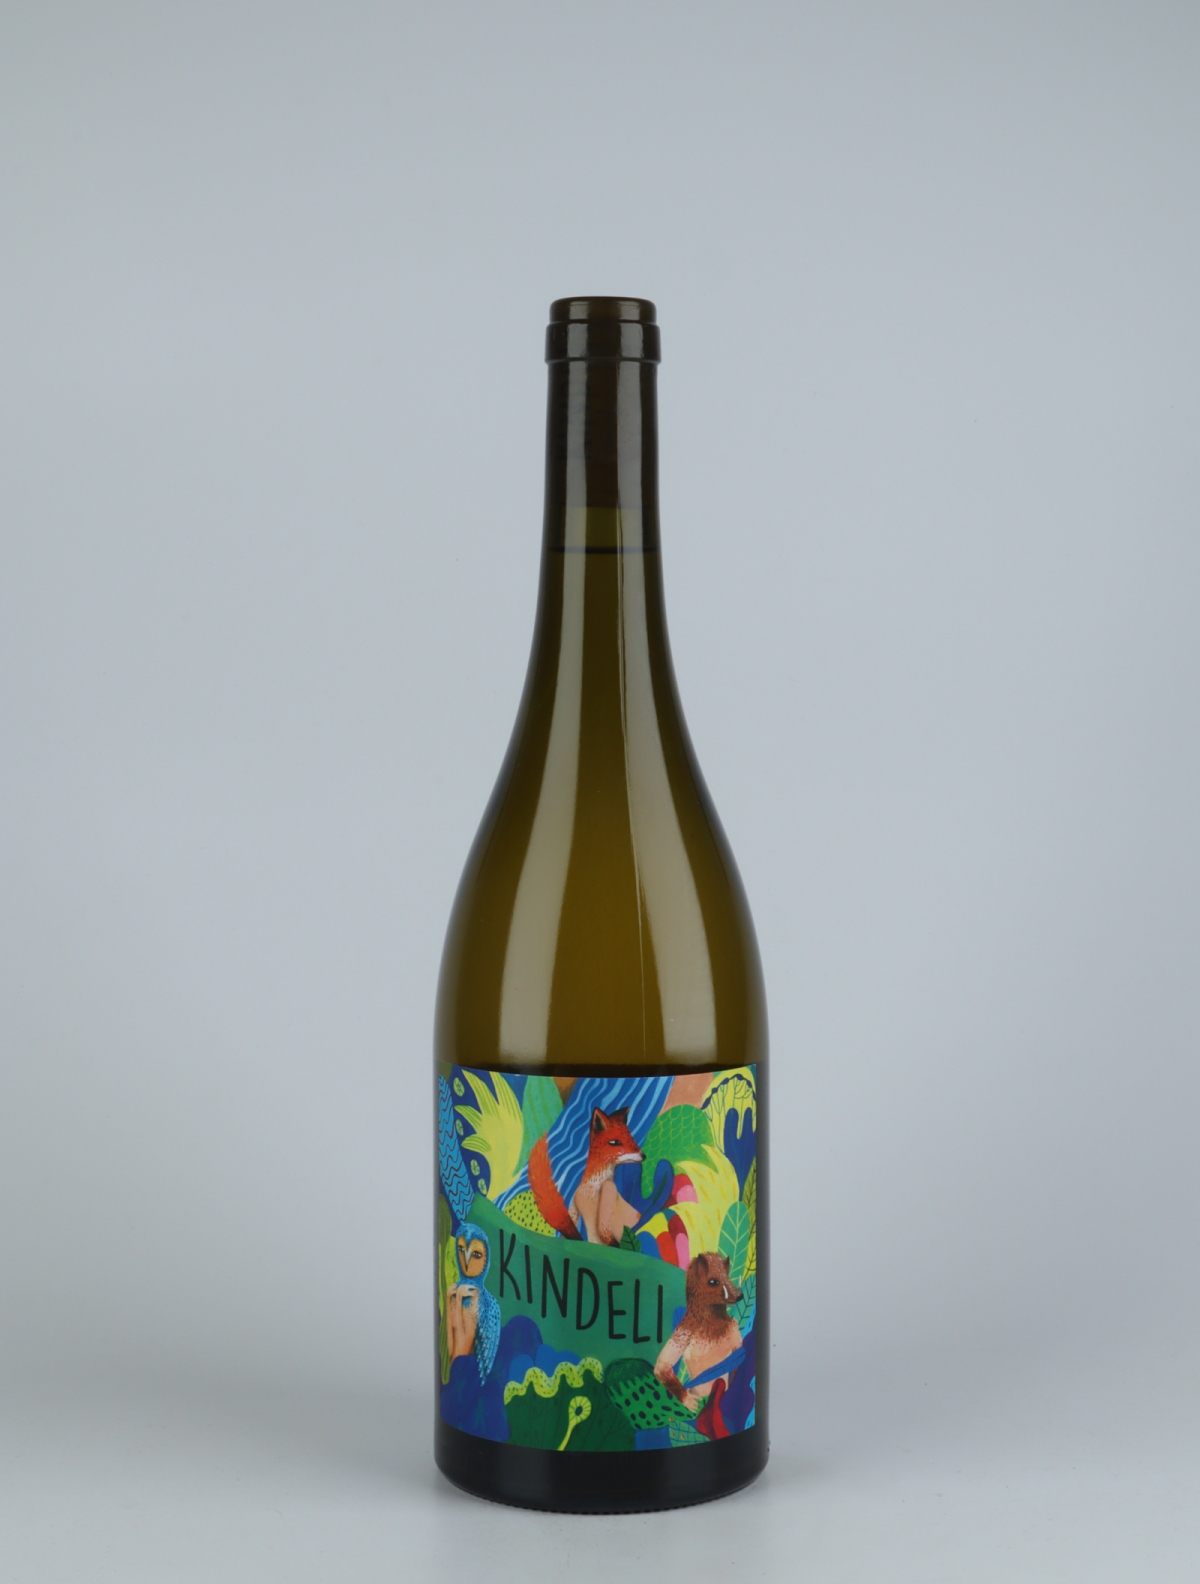 A bottle 2020 Blanco White wine from Kindeli, Nelson in New Zealand